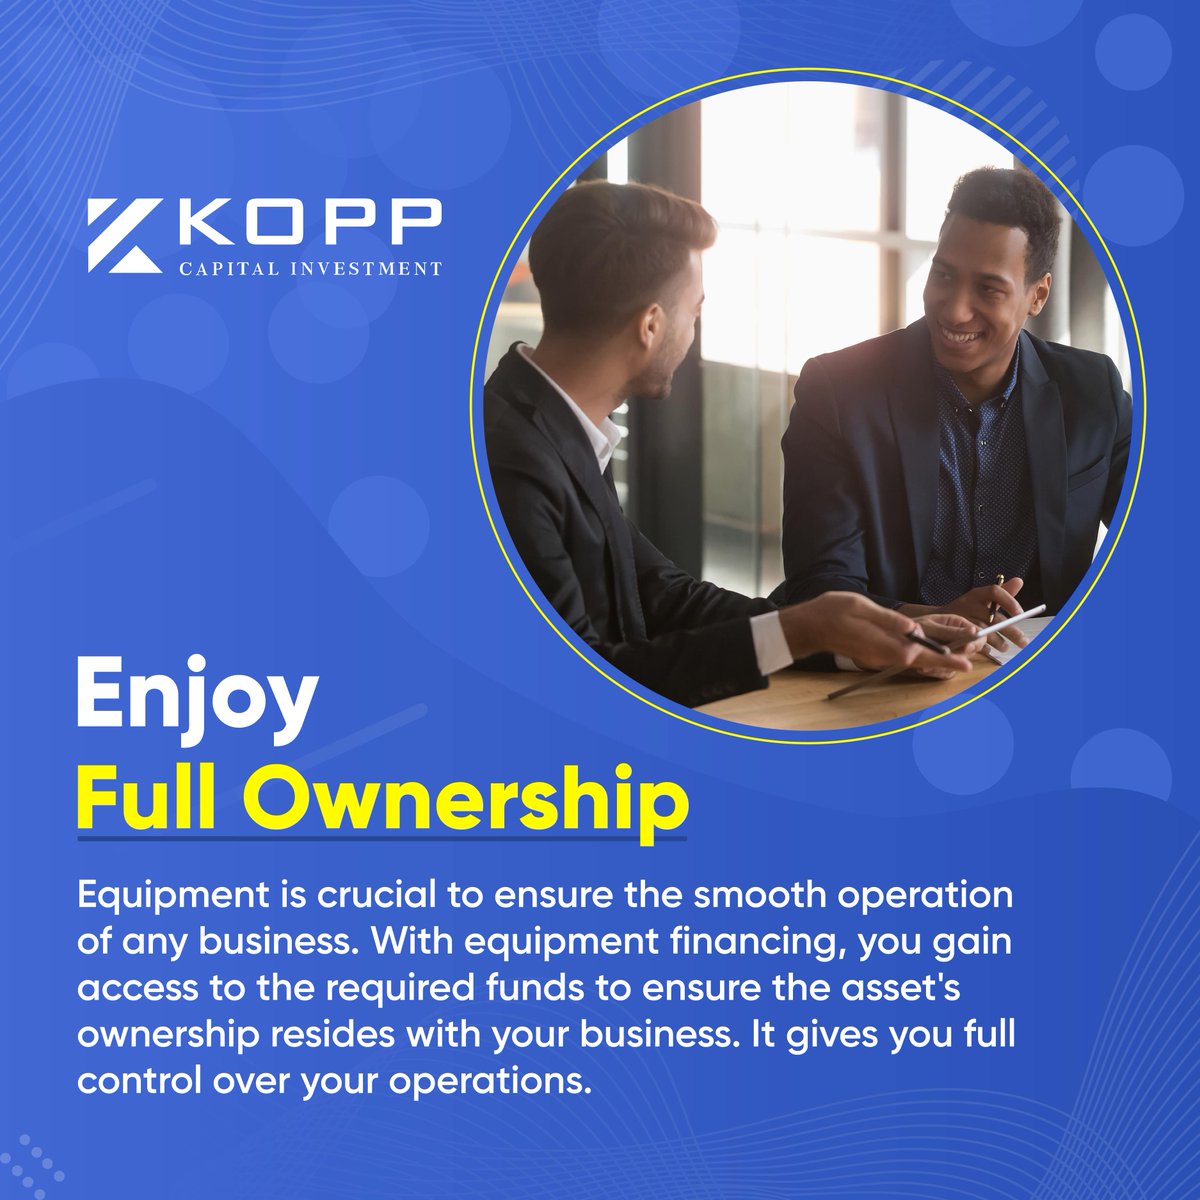 Enjoy Full Ownership

#KoppCapitalInvestment #FullOwnership #EquipmentFinancing #FinancingOption #FinancialServices